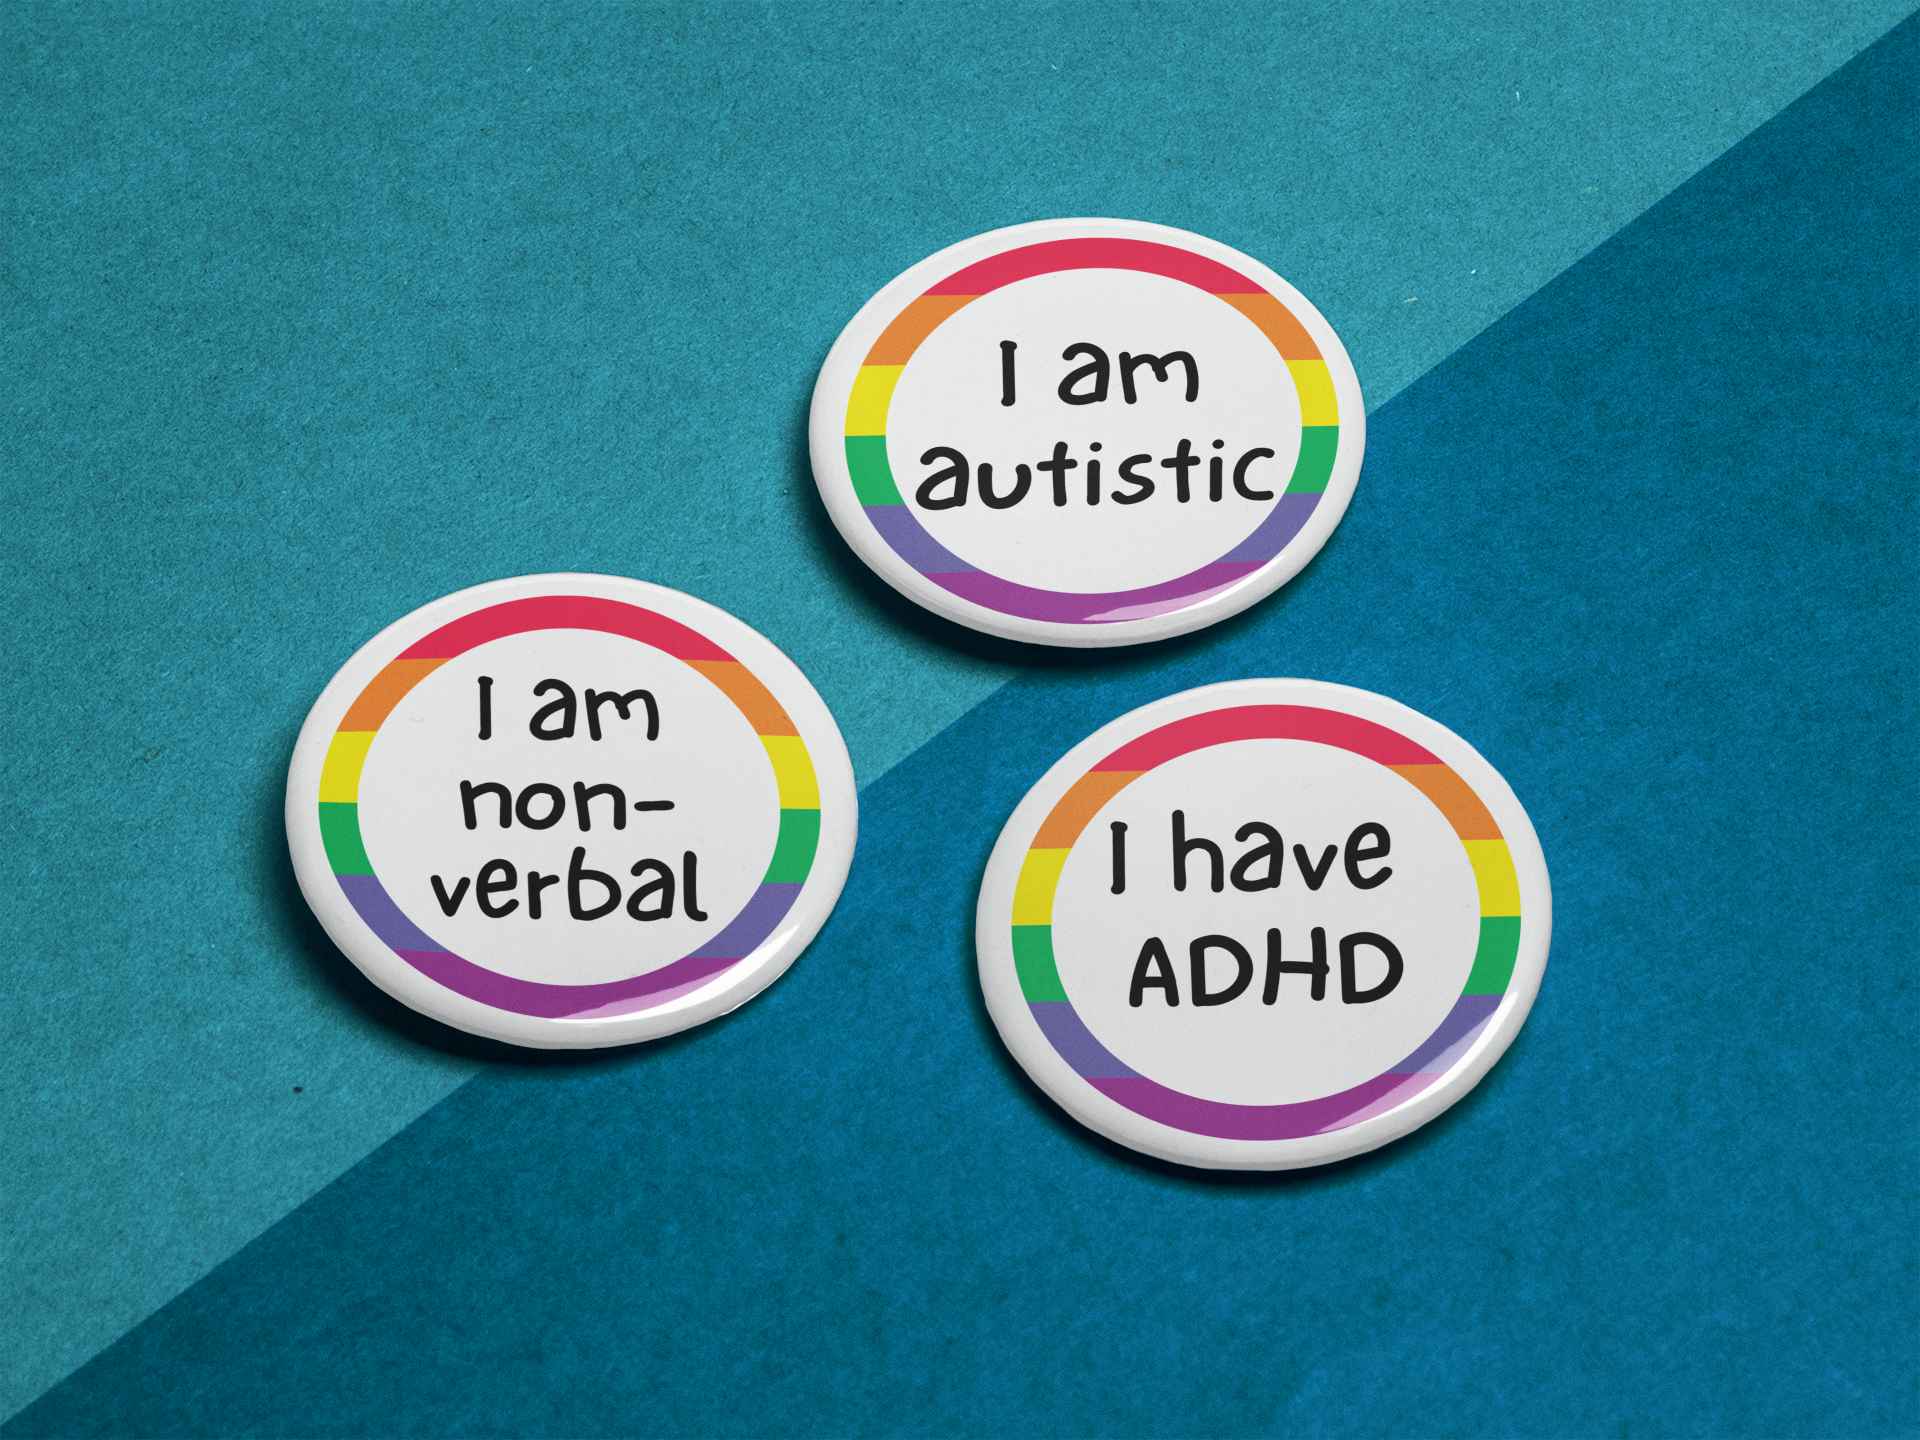 I have ADHD Button - beyourownherodesign